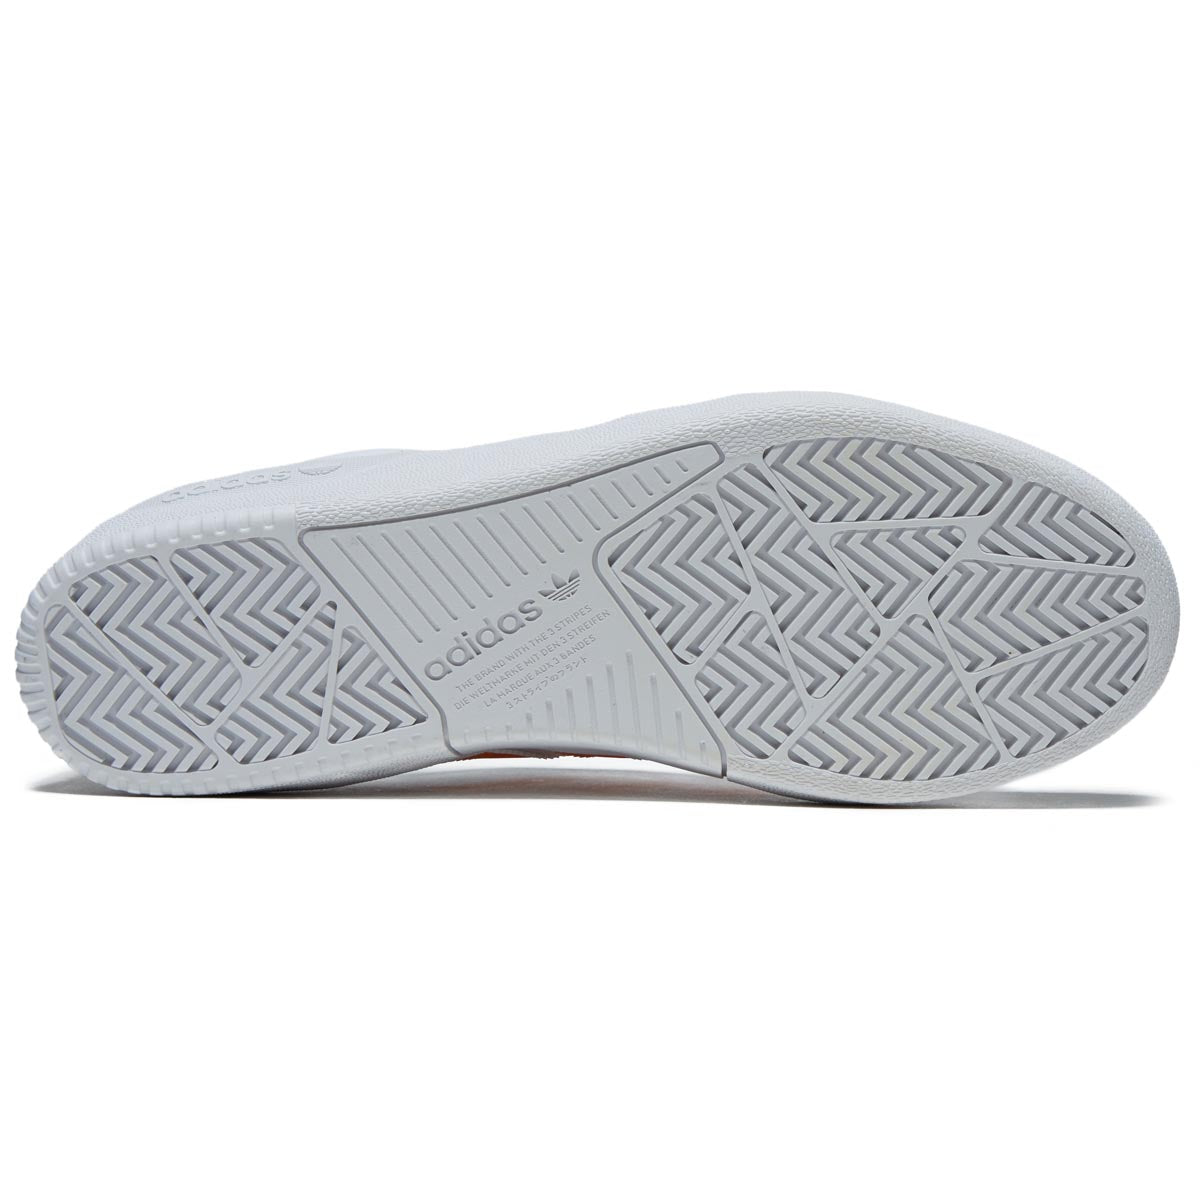 Adidas Tyshawn Low Shoes - White/Crystal White/Gold Metallic image 4